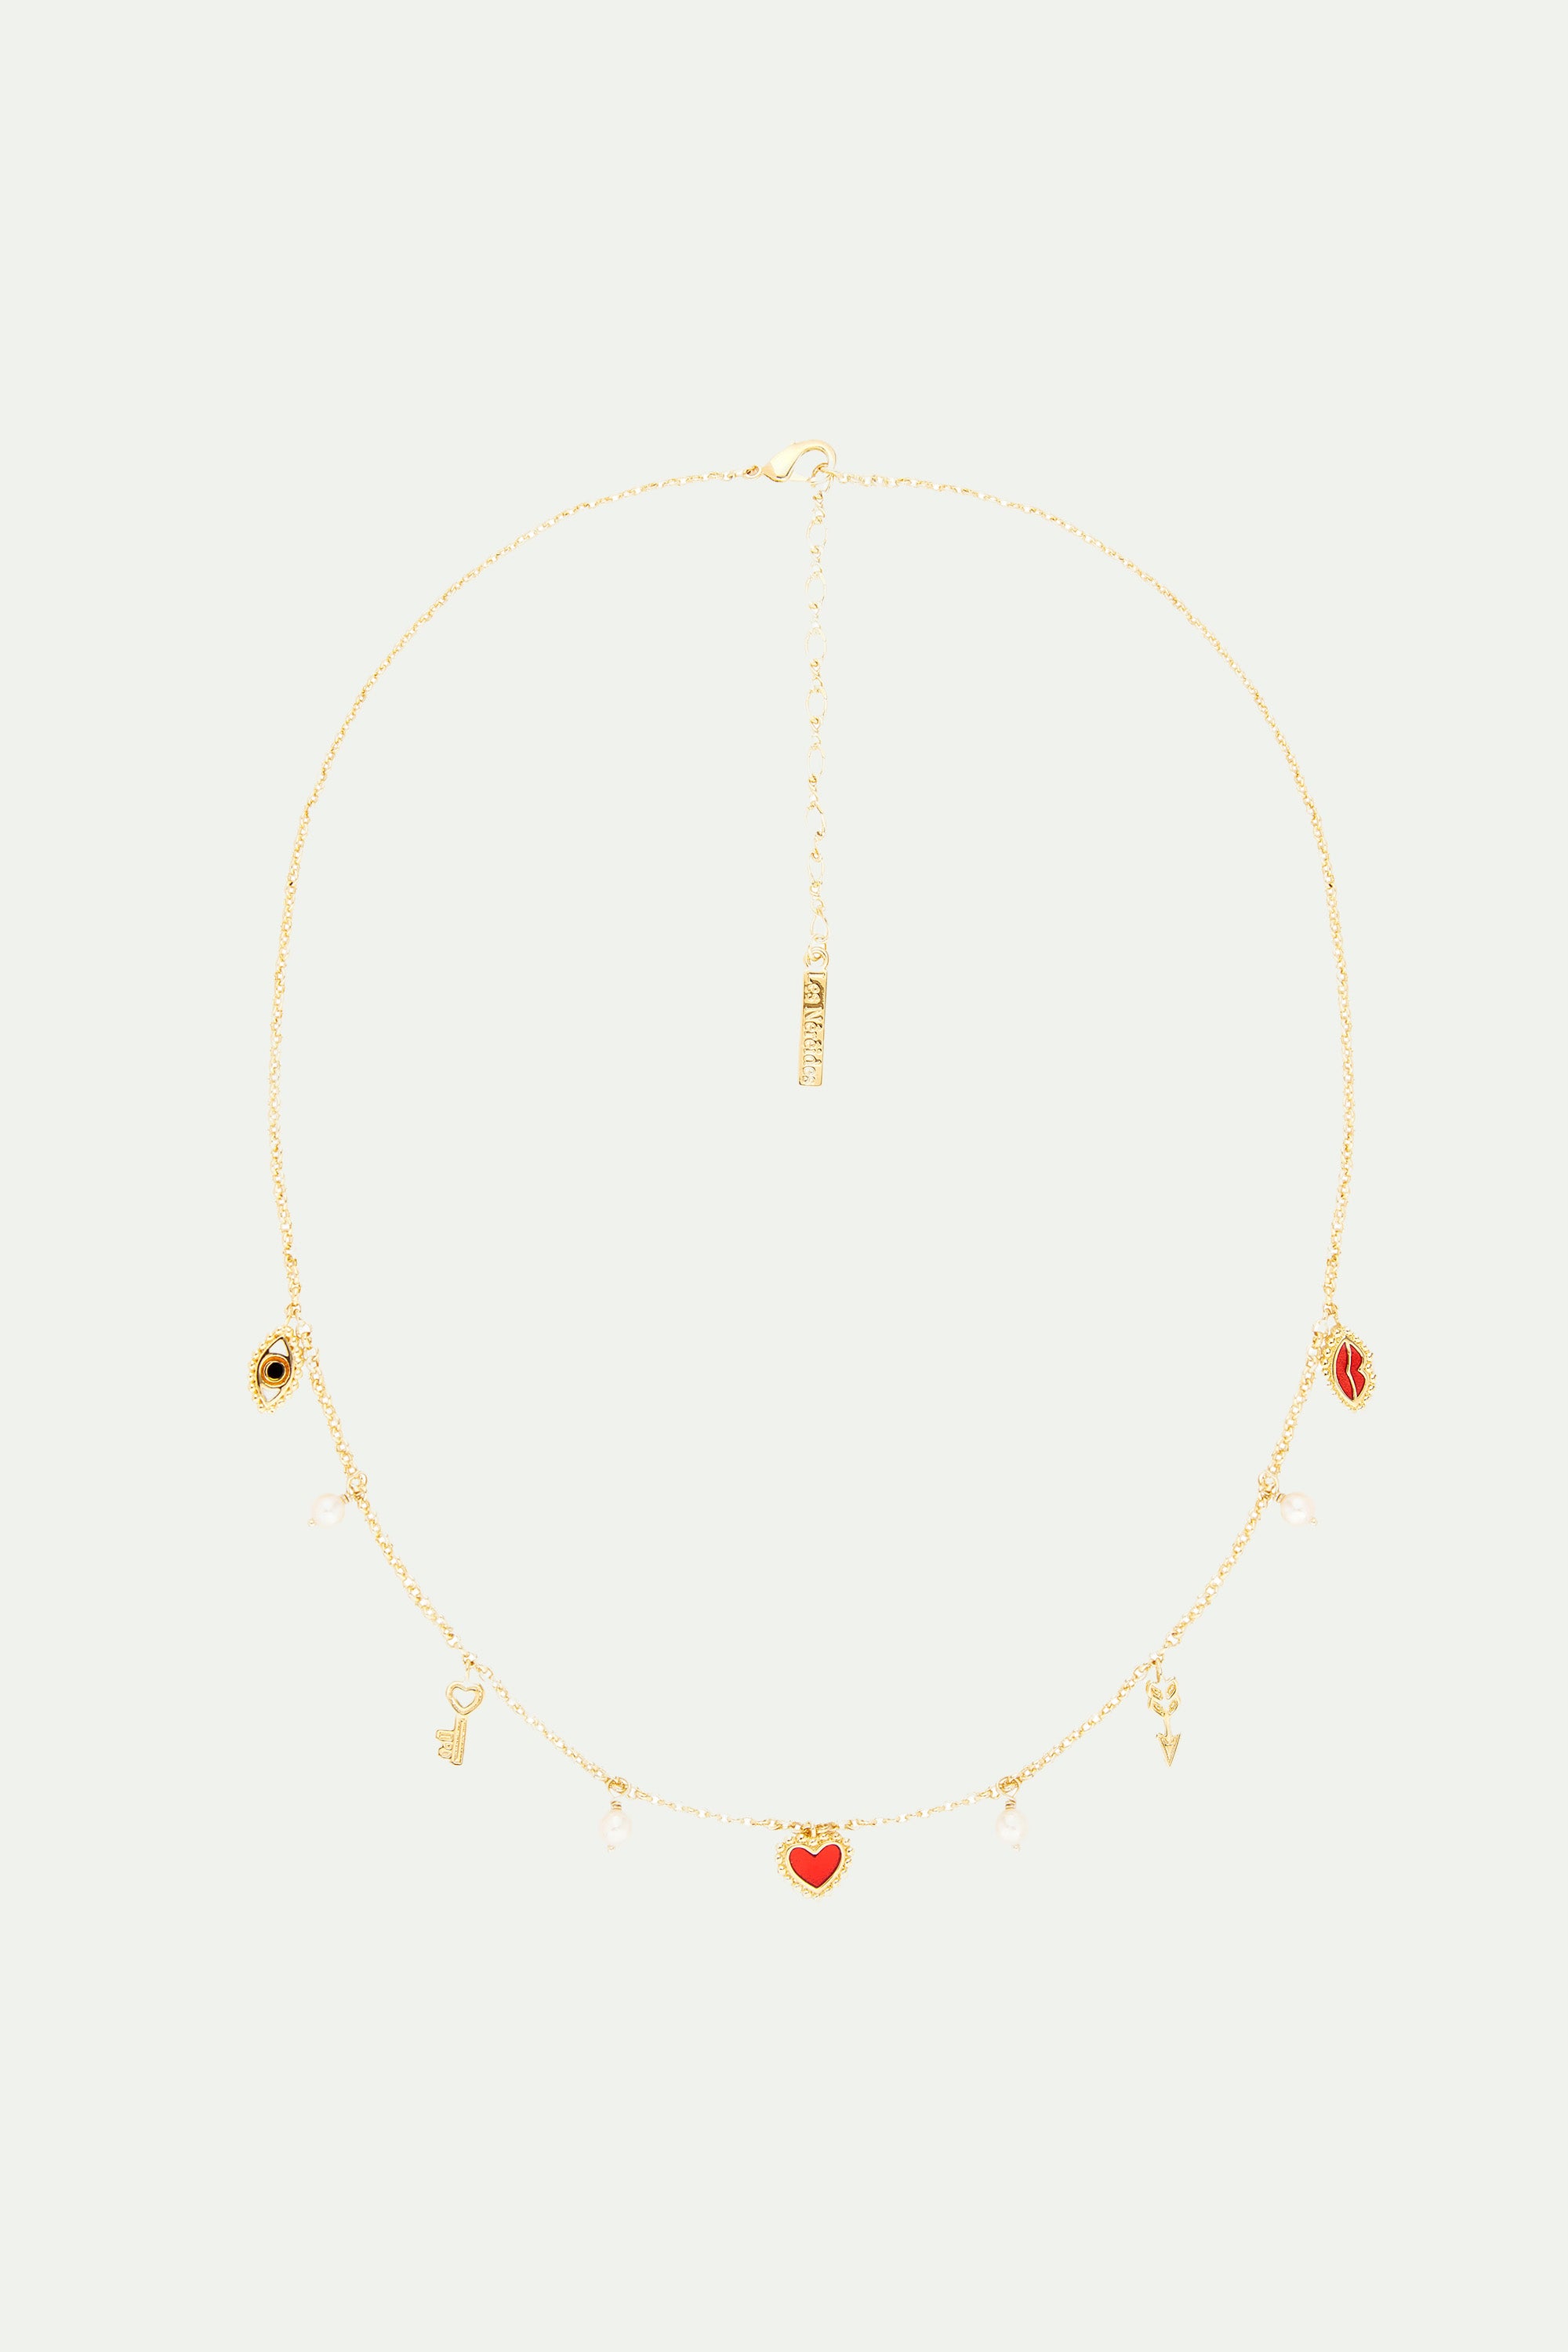 Oracle pendant necklace